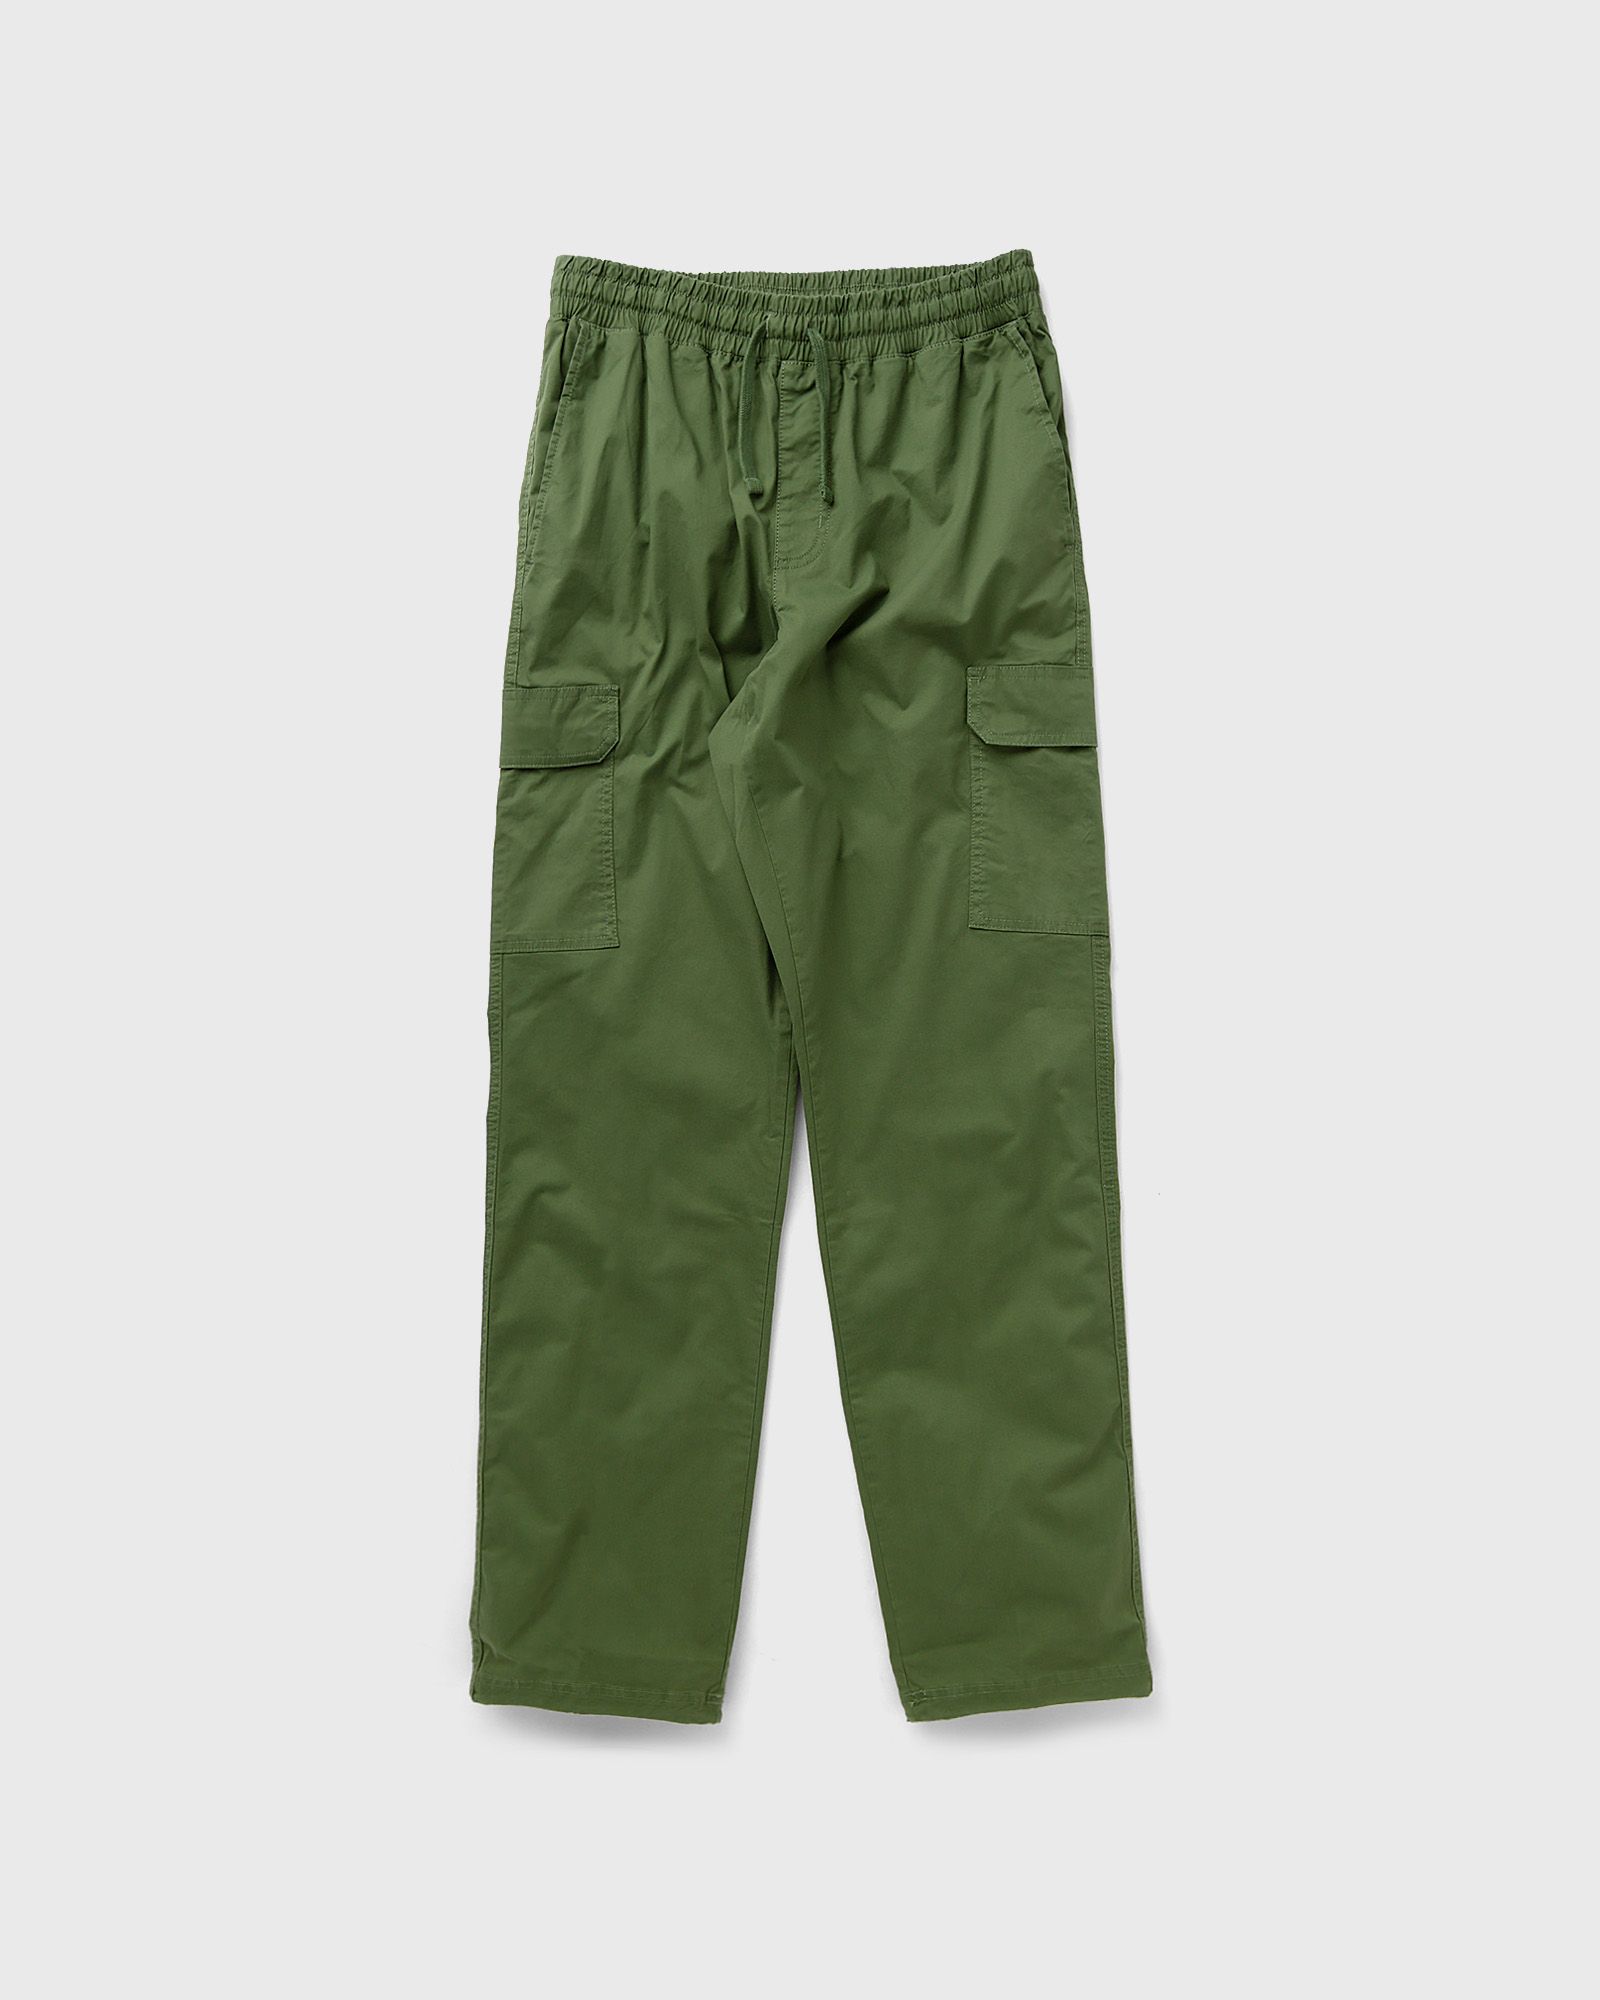 Columbia - rapid rivers cargo pant men cargo pants green in größe:xl